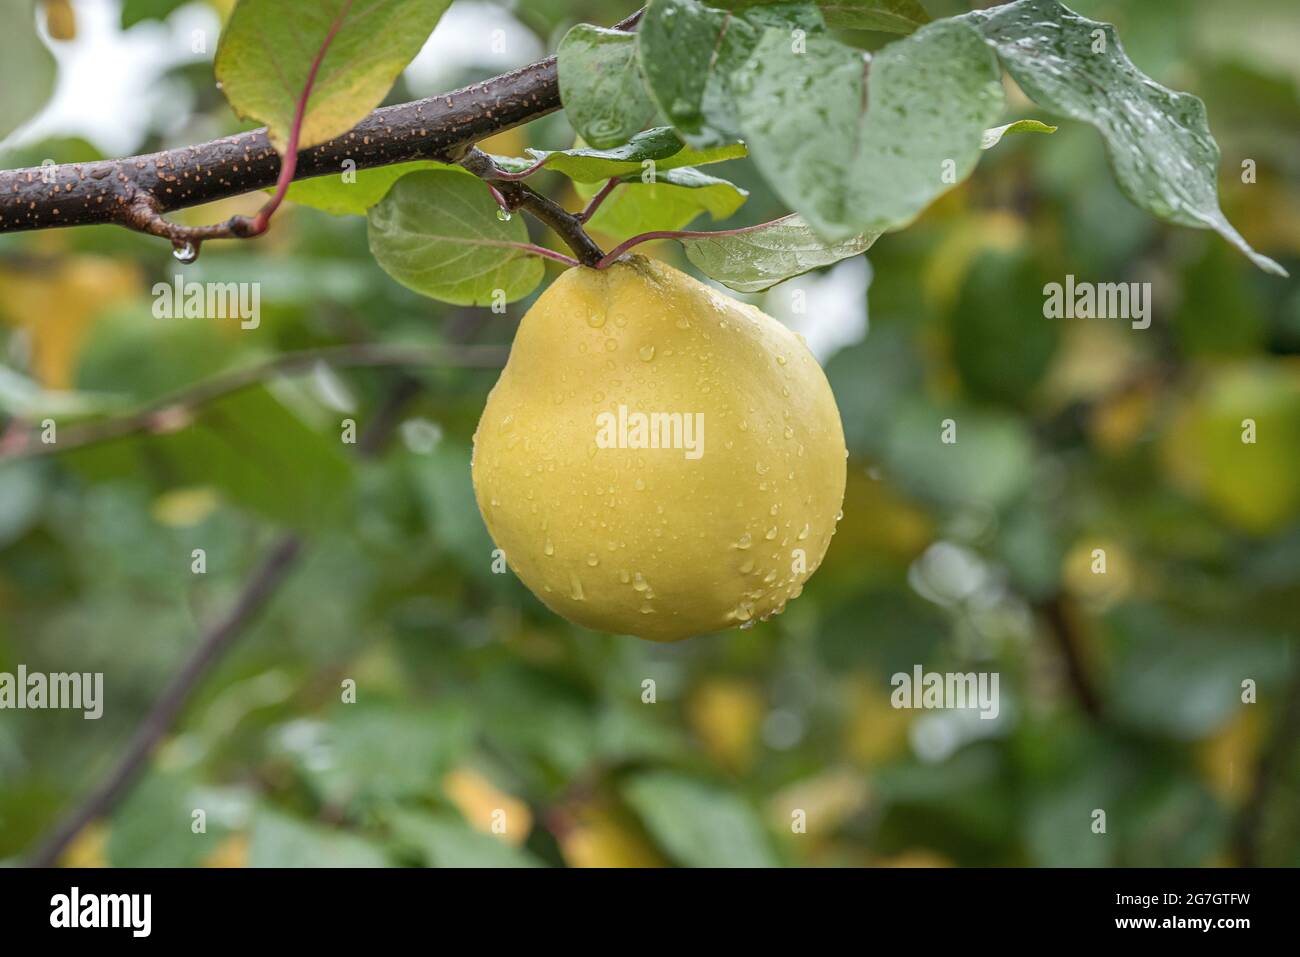 Mela cotogna comune (Cydonia oblonga 'Matador', Cydonia oblona Matador), mela cotogna su un albero, cultivar Matador Foto Stock